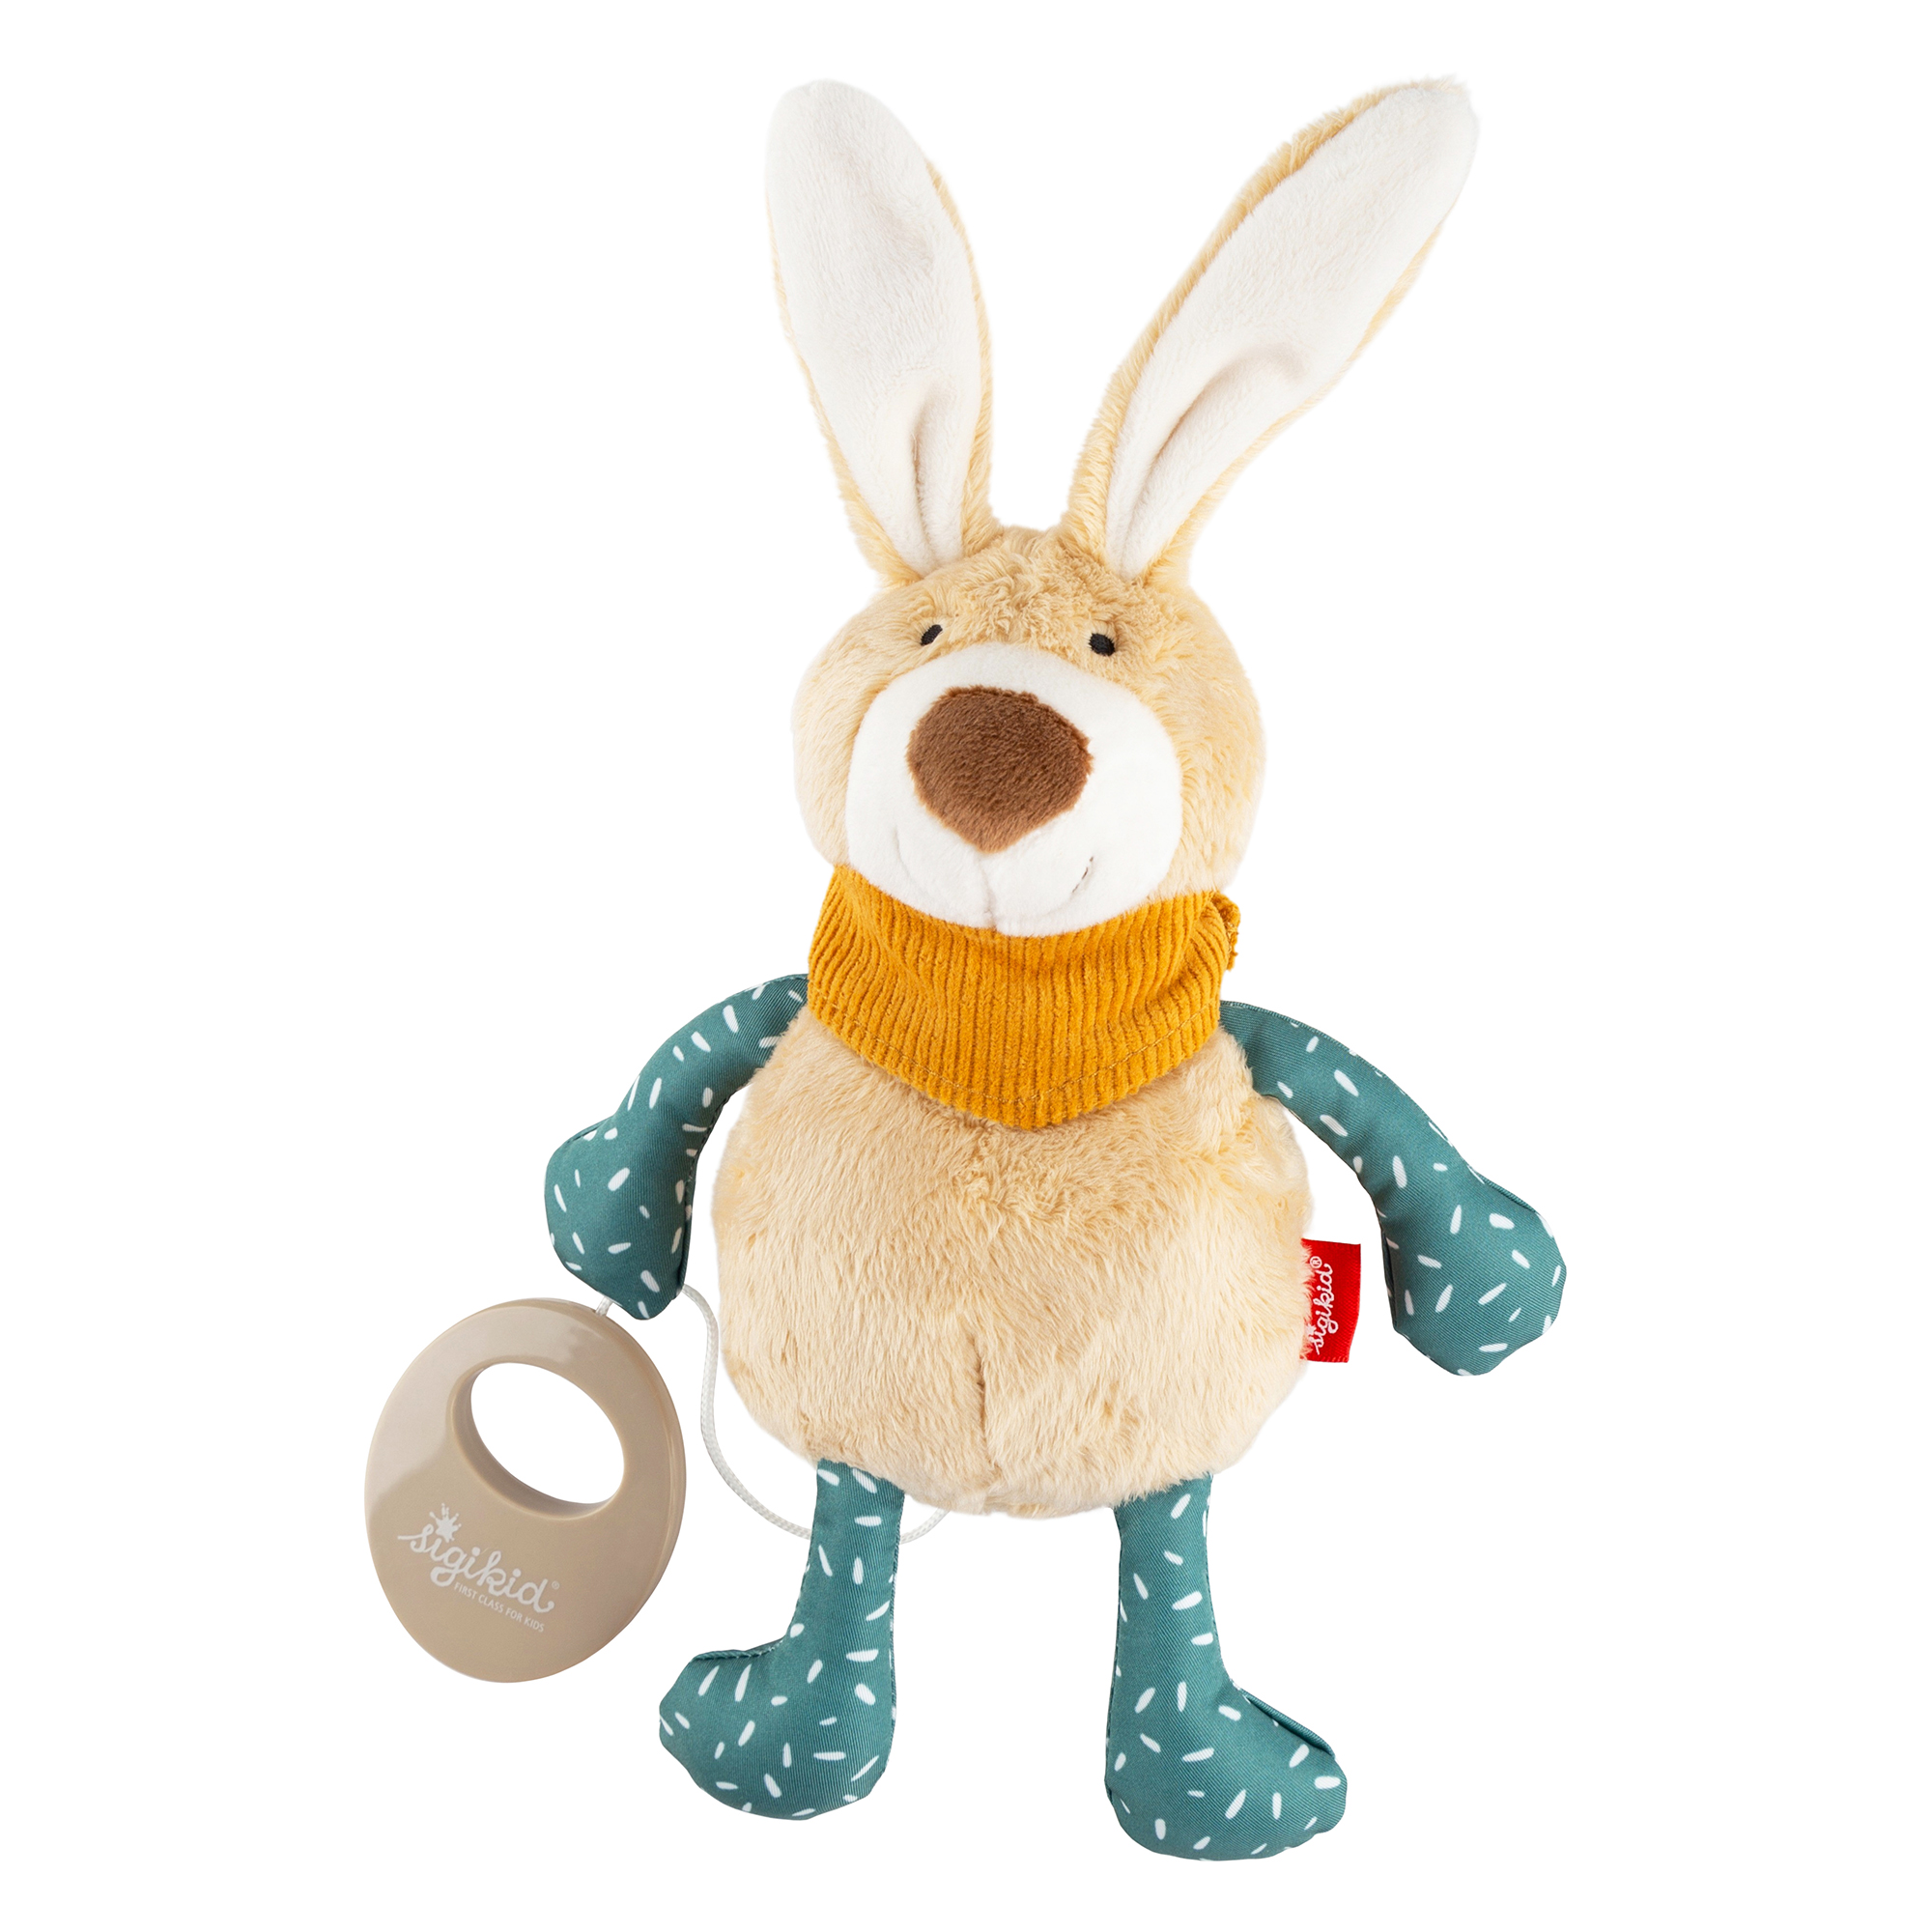 Musical plush toy rabbit